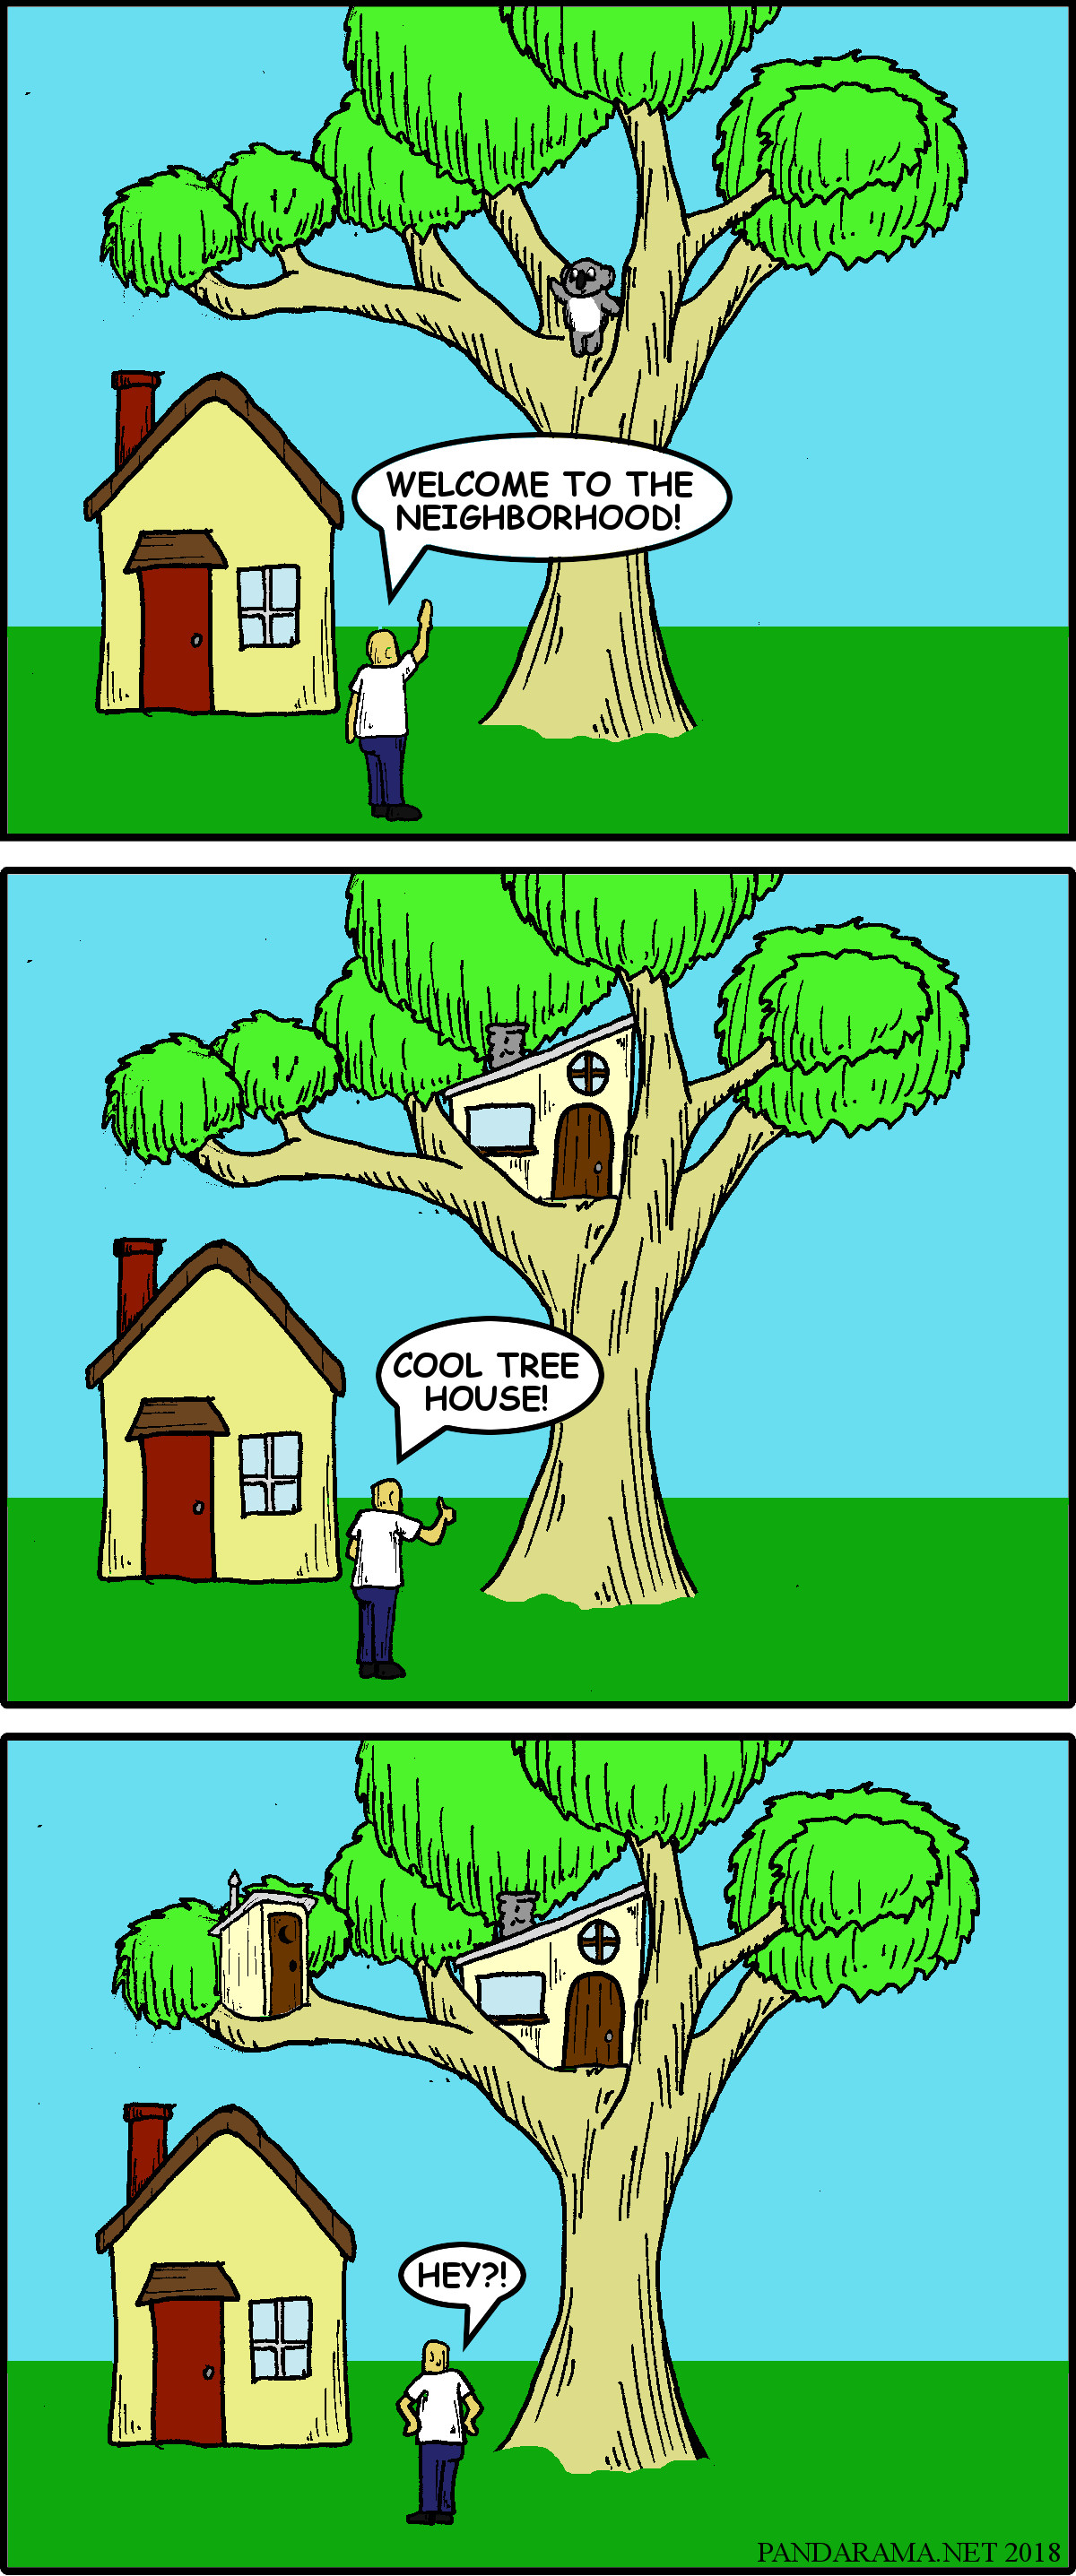 cartoon where a koala builds a tree house and an out house in the tree over its neighbors house.